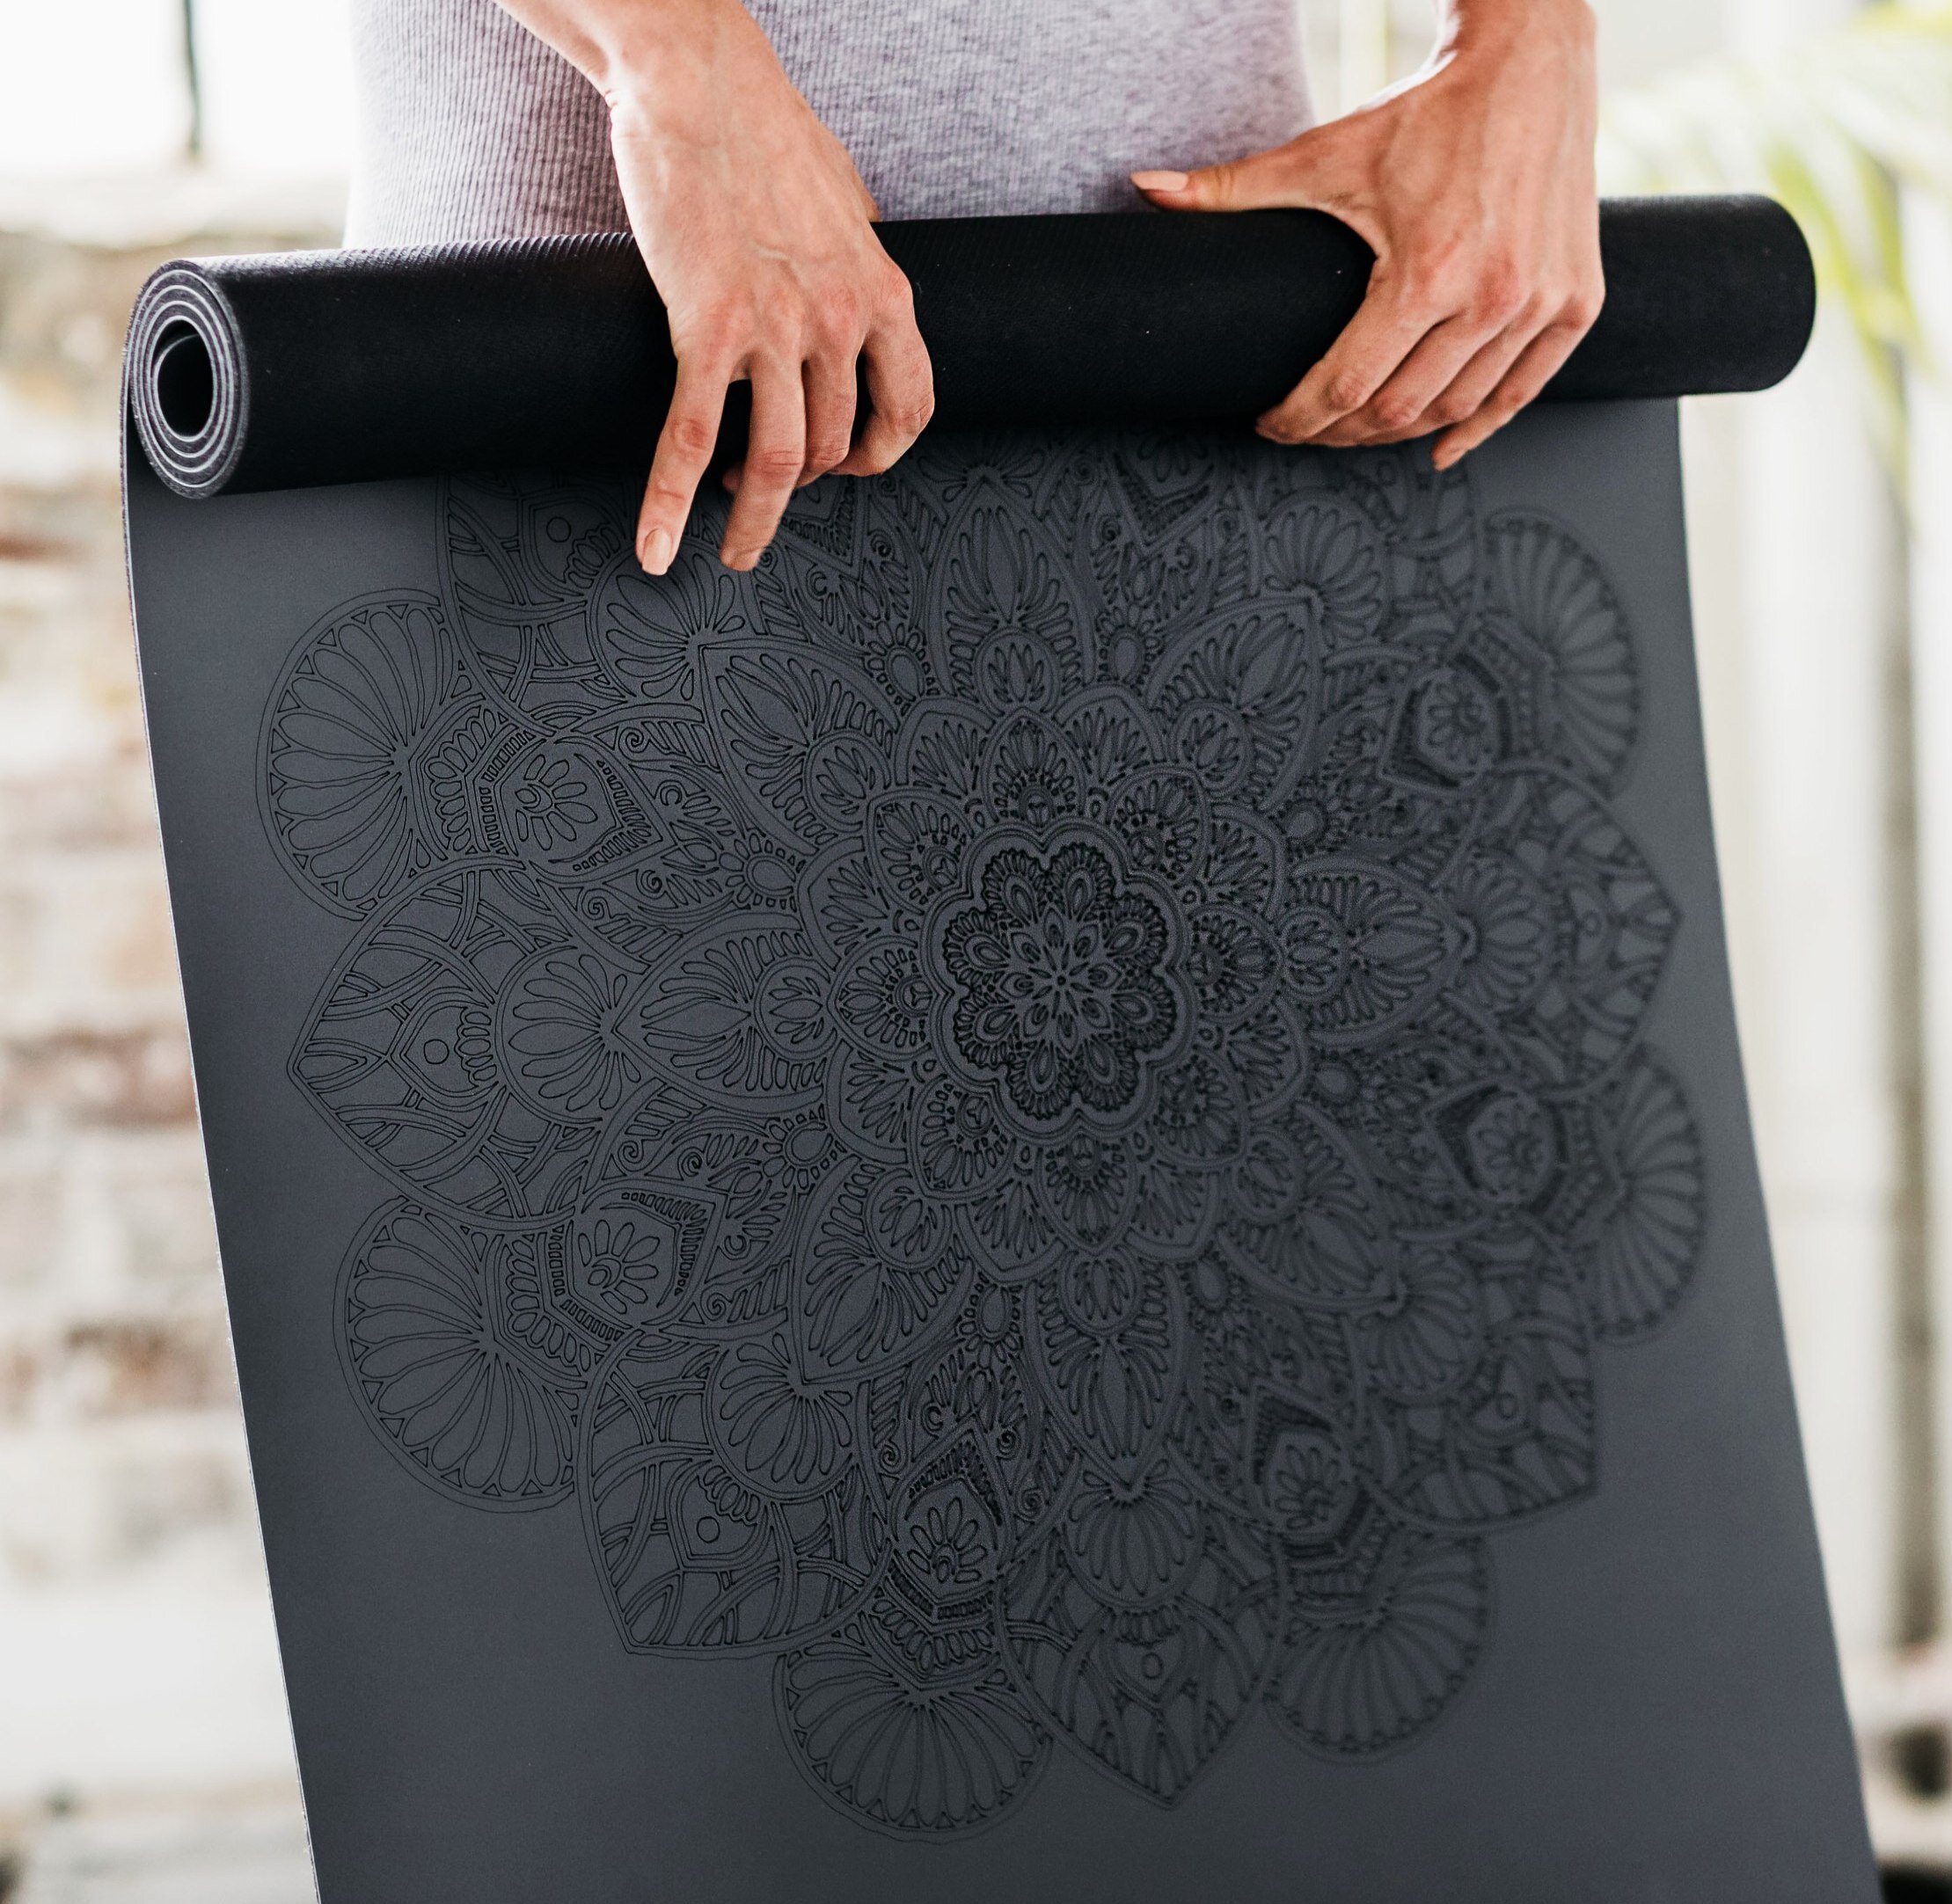 1.Grey Yoga Mat Mandala DIYogi.jpg